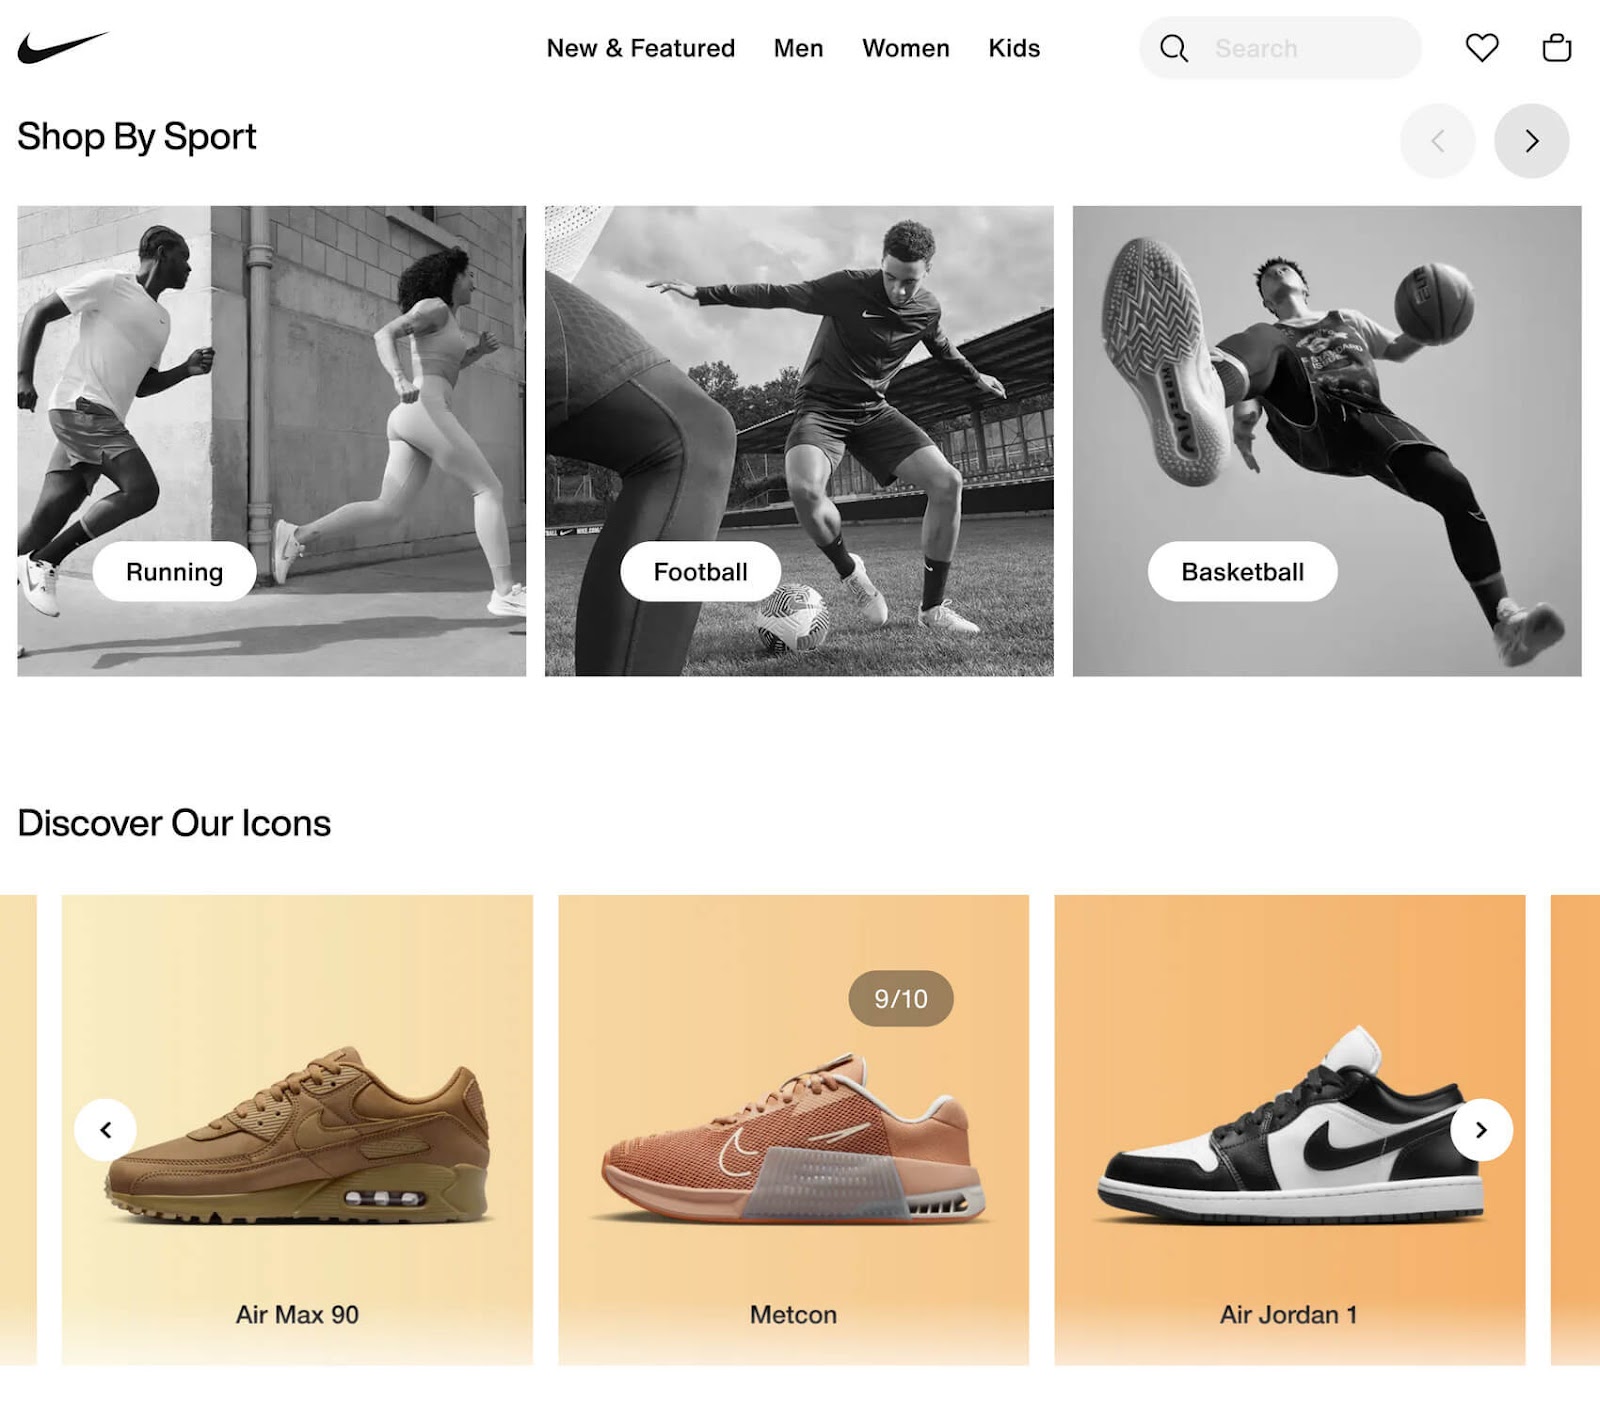 Nike’s homepage